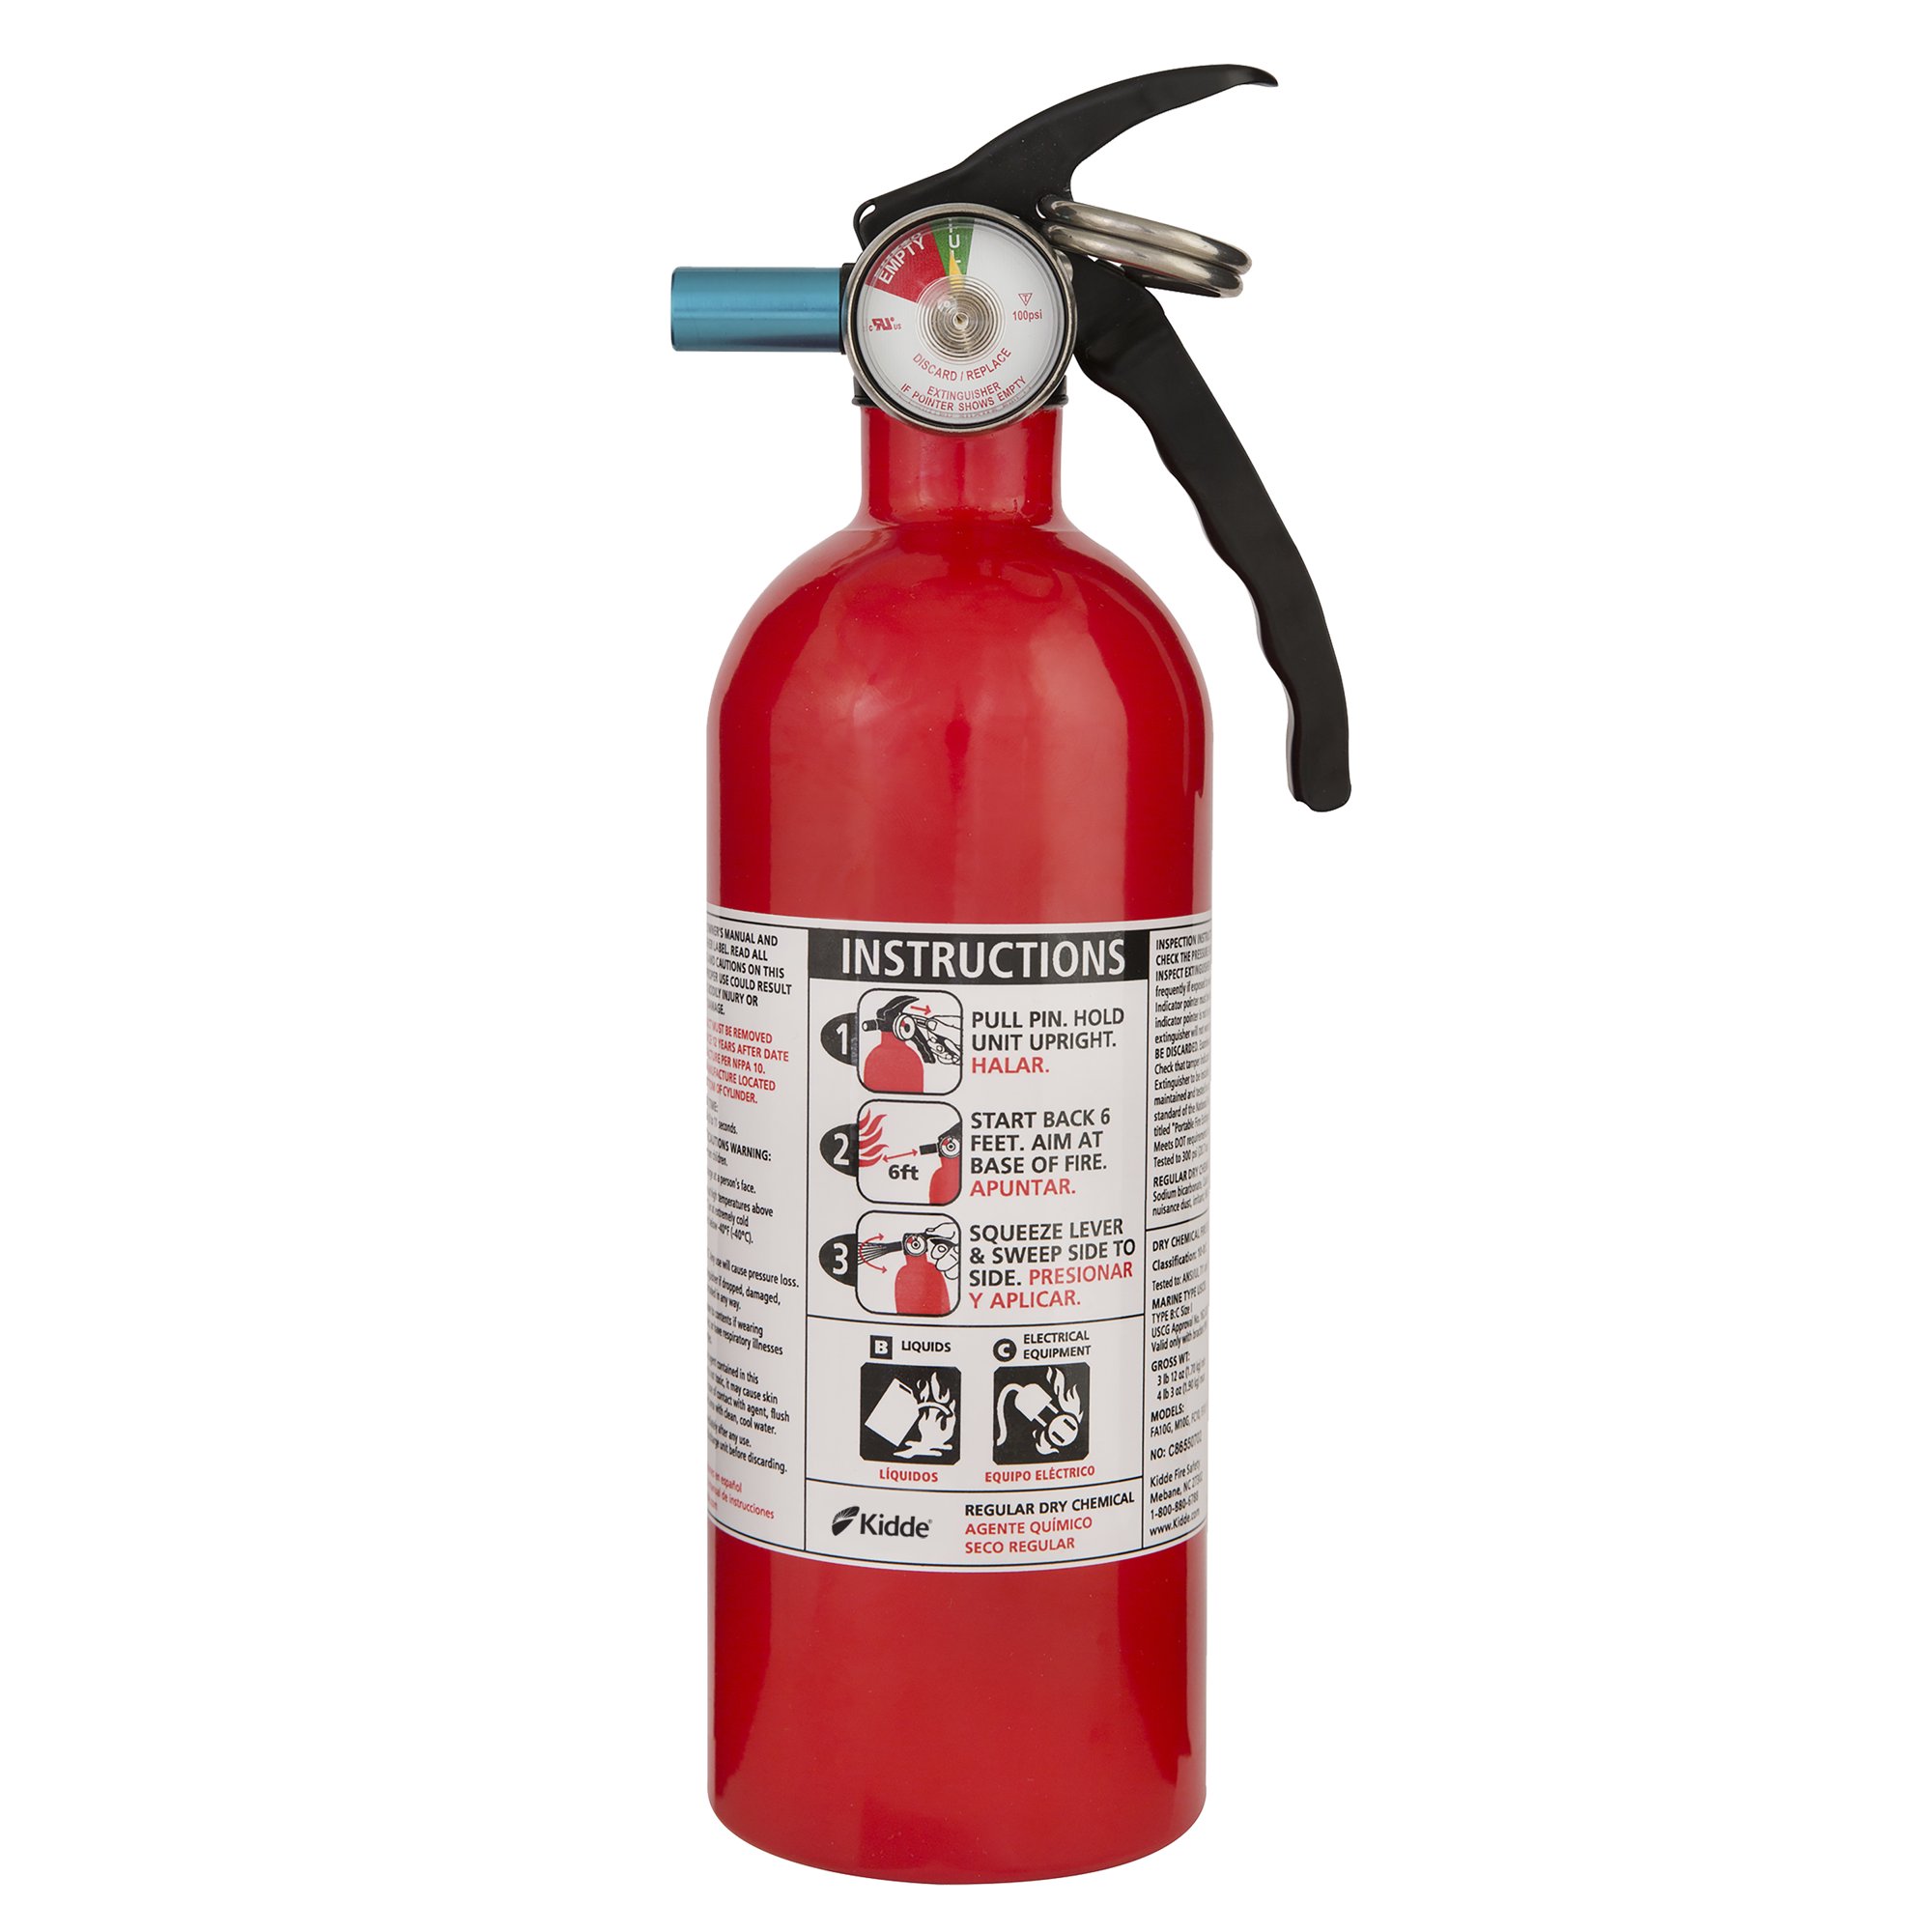 Kidde FX5 II Auto Fire Extinguisher, 5 B:C Rated